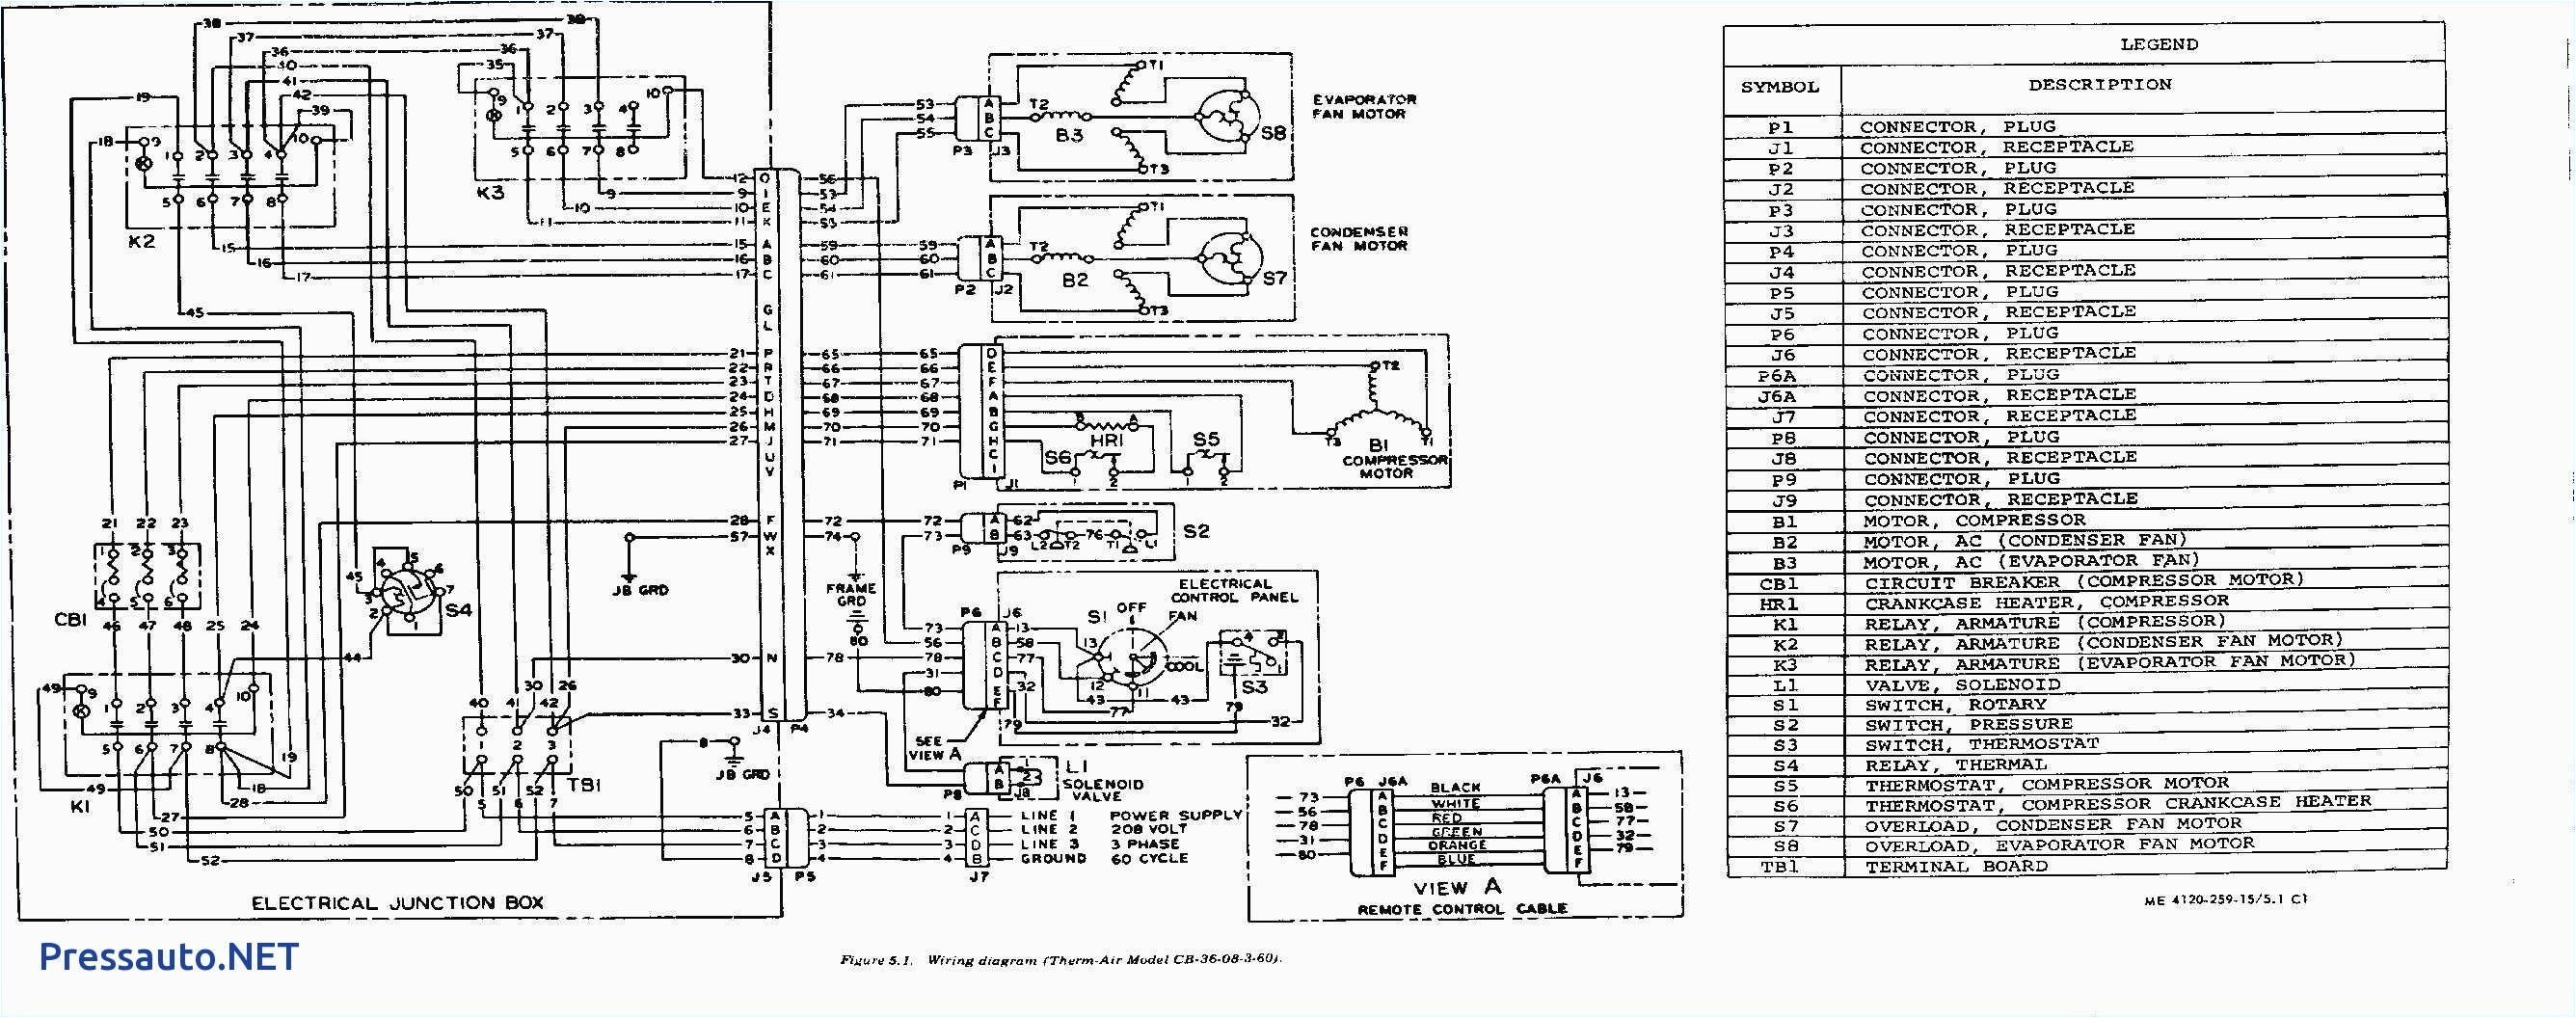 trane xr13 parts diagram wiring diagrams for trane xr13 wiring diagram